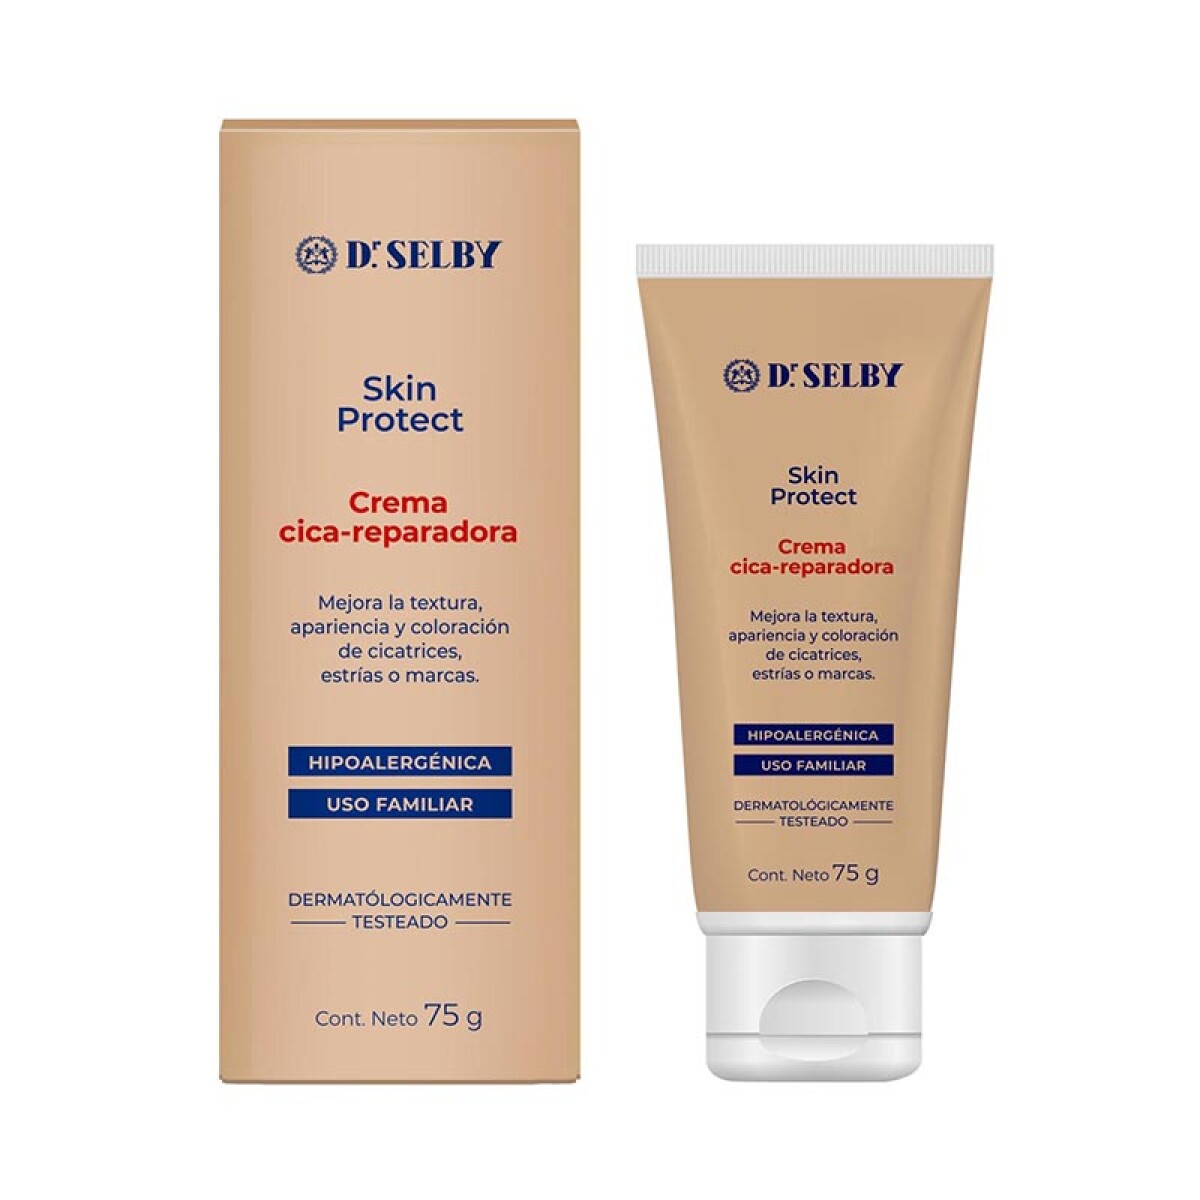 Crema Dr selby Skin protect - Crema cica-reparadora 75 g 